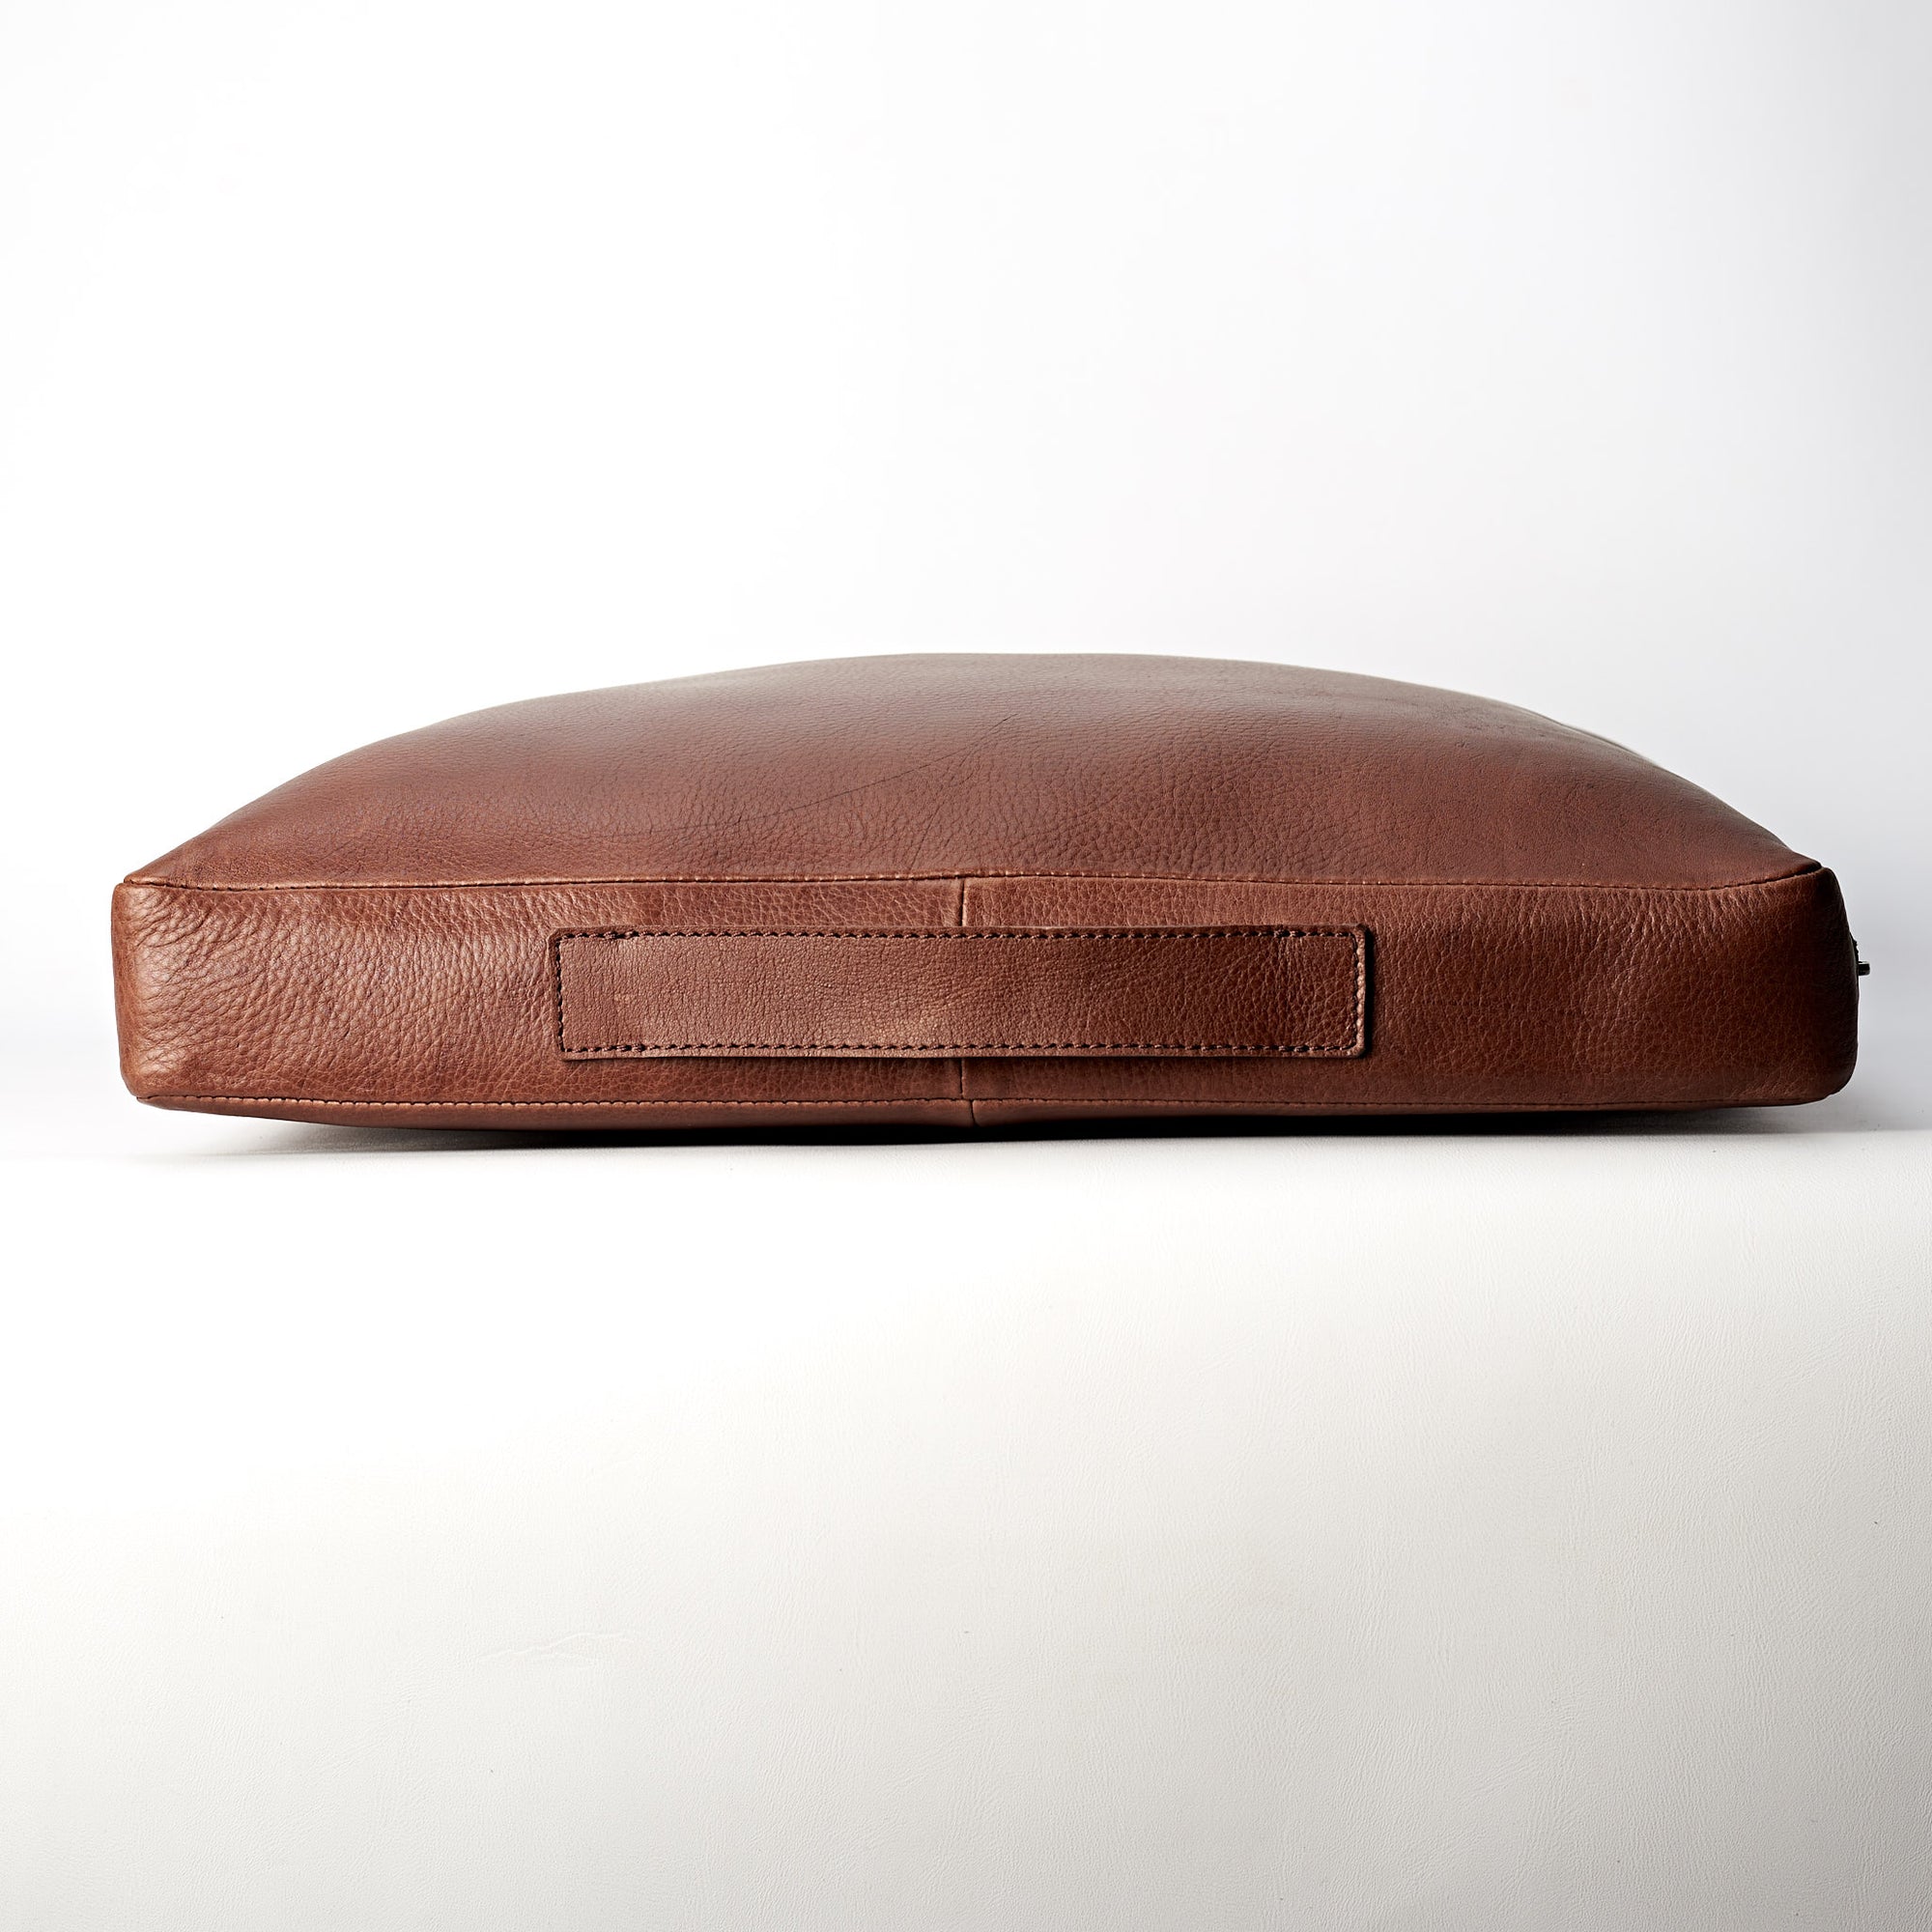 Handler. travel meditation cushion. Leather meditation cushion, perfect for yoga and meditation. Modern squared zafu